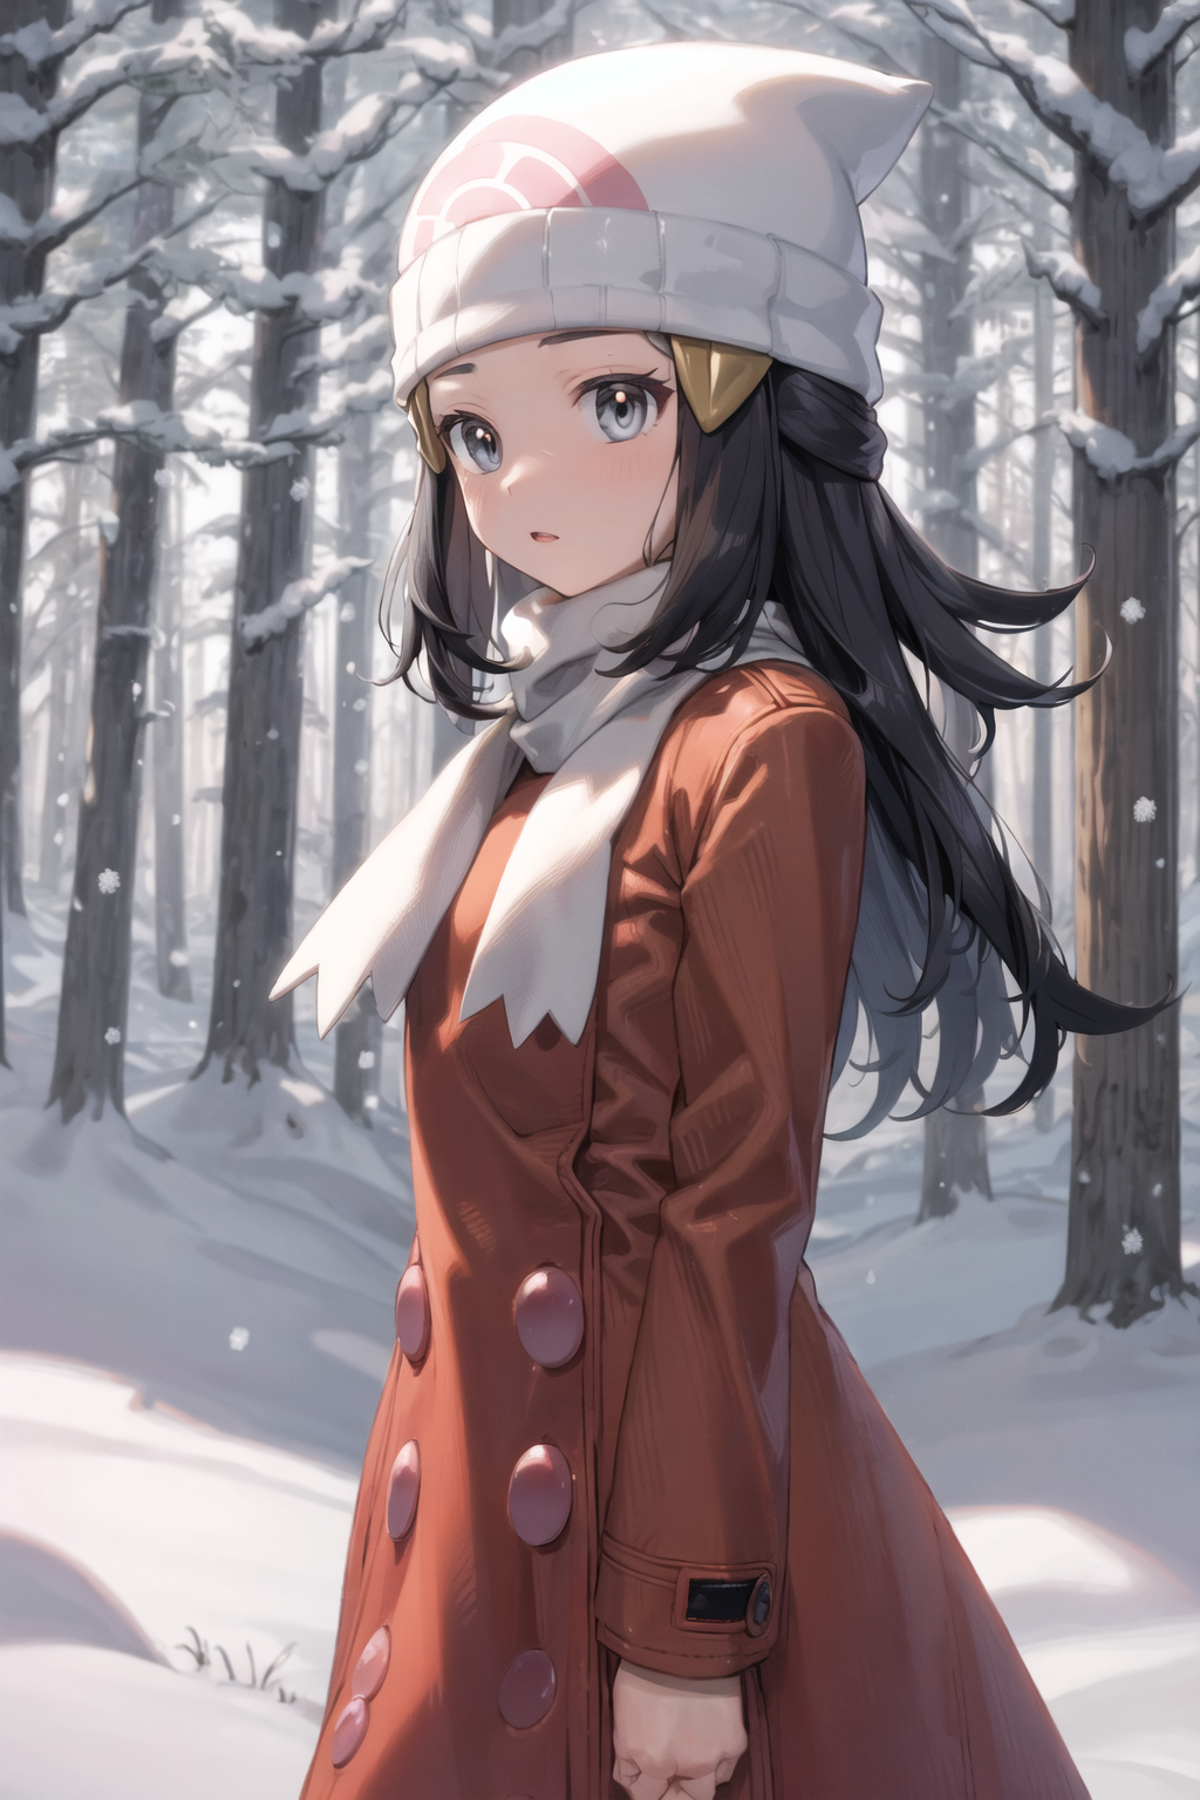 masterpiece, best quality, <lora:DawnLora:0.7>, dawn \(pokemon\), forest, pine tree, snow, red coat, white headwear, white...